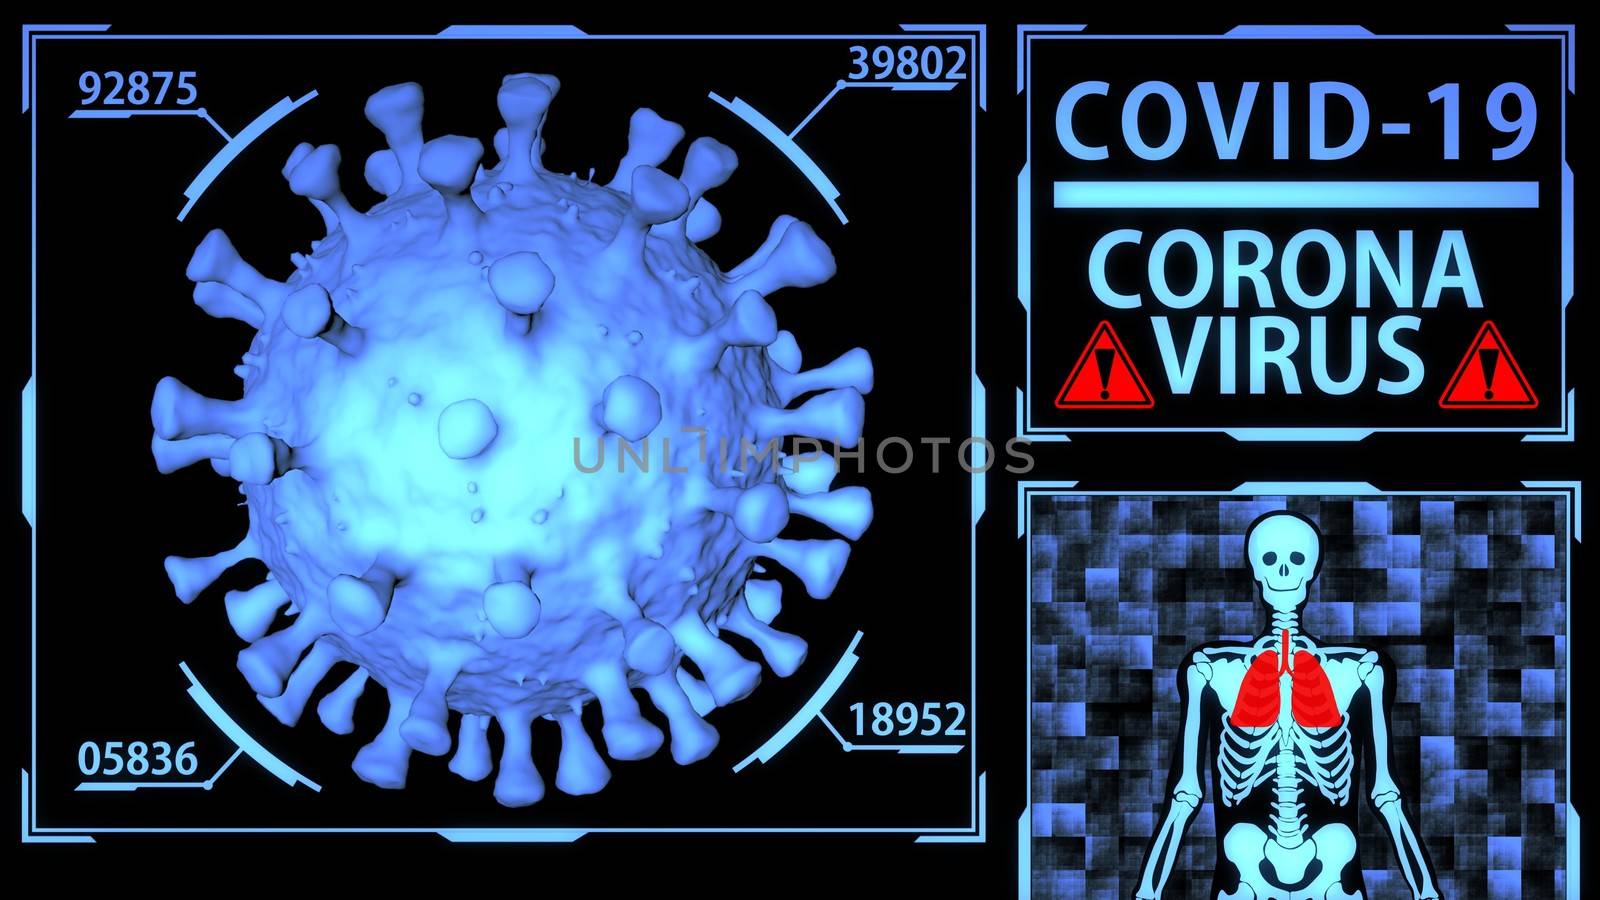 Coronavirus/Covid-19 3D Model in Futuristic Digital Medical HUD with Body Scanning details Background by ariya23156